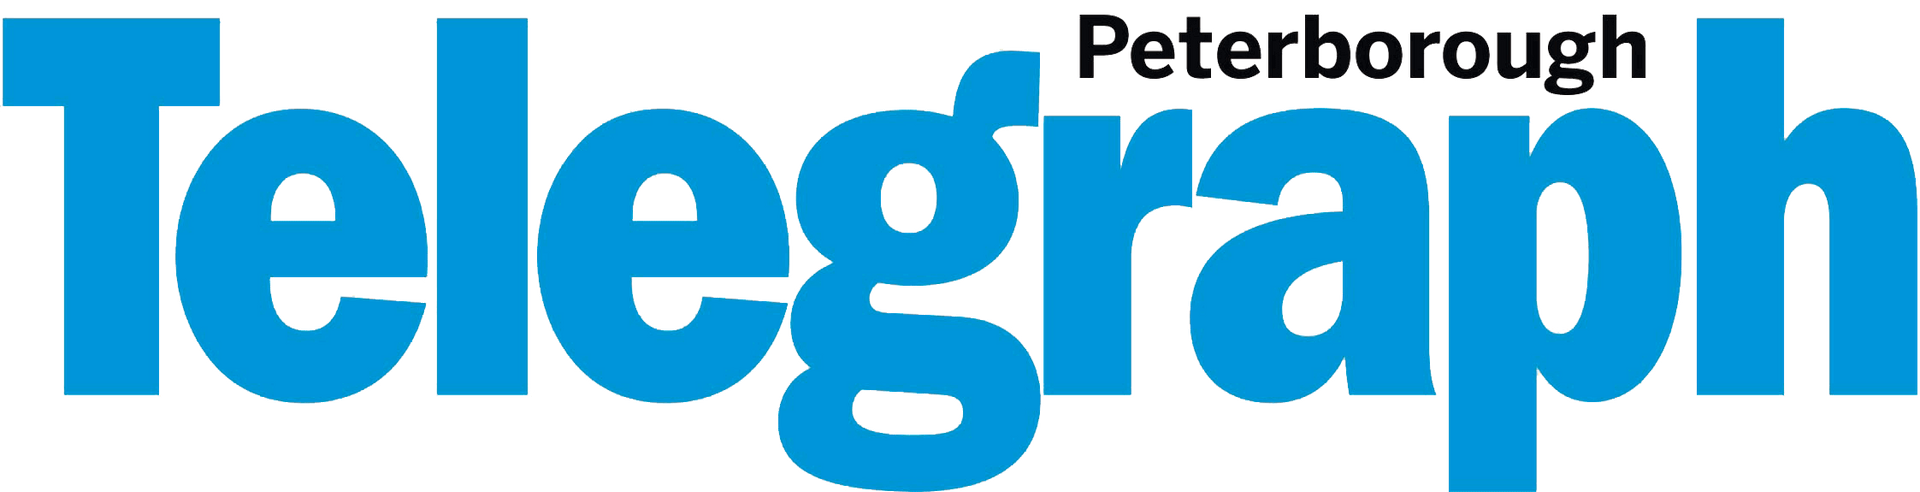 peterborough today logo